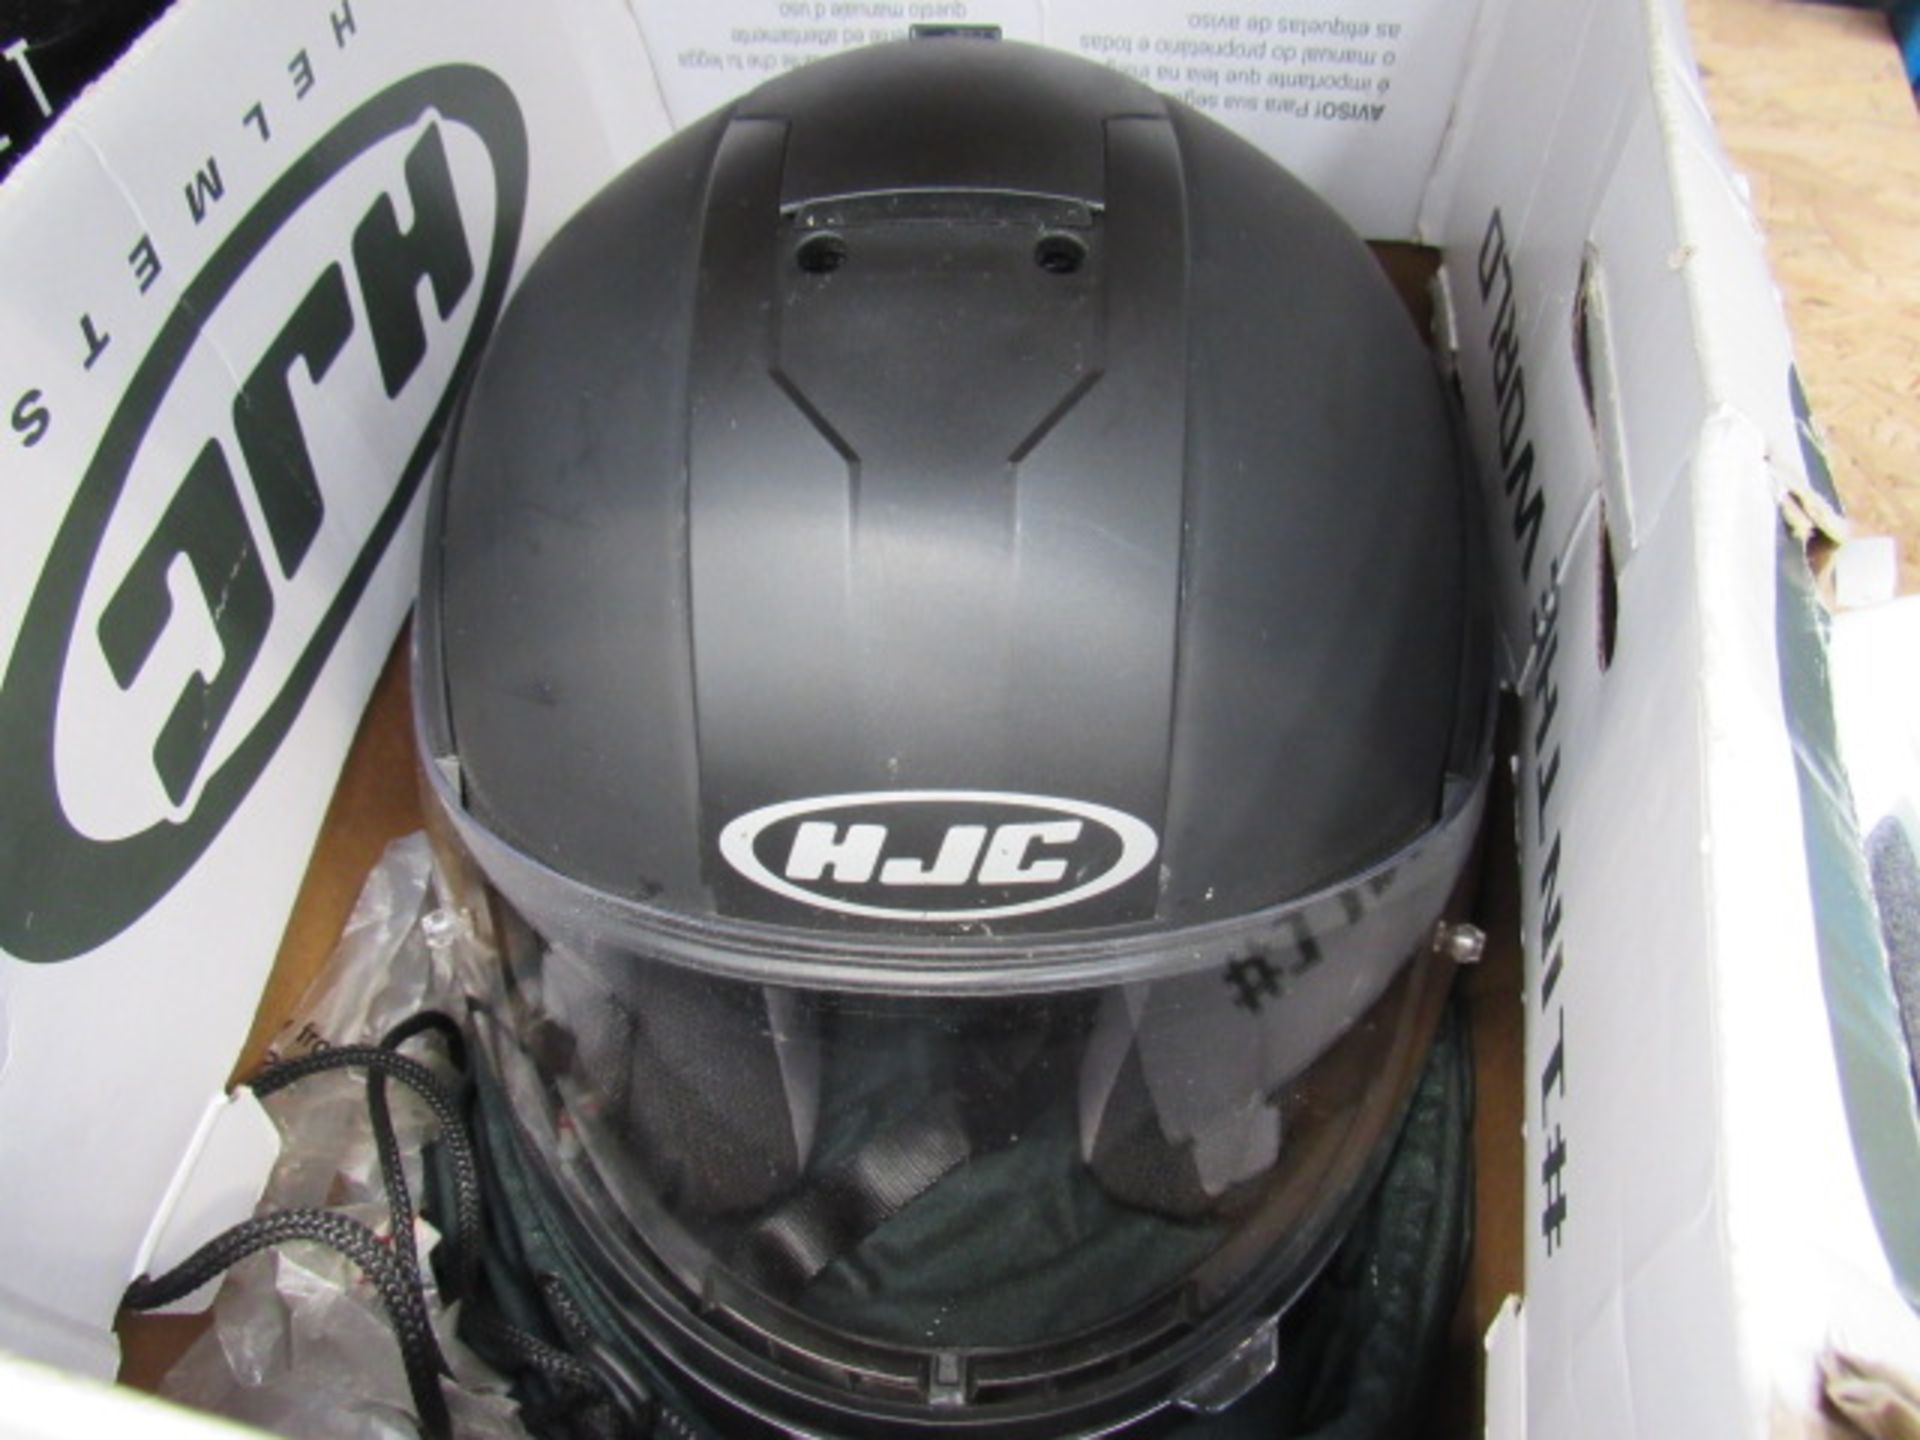 HJC crash helmet with visor and cover